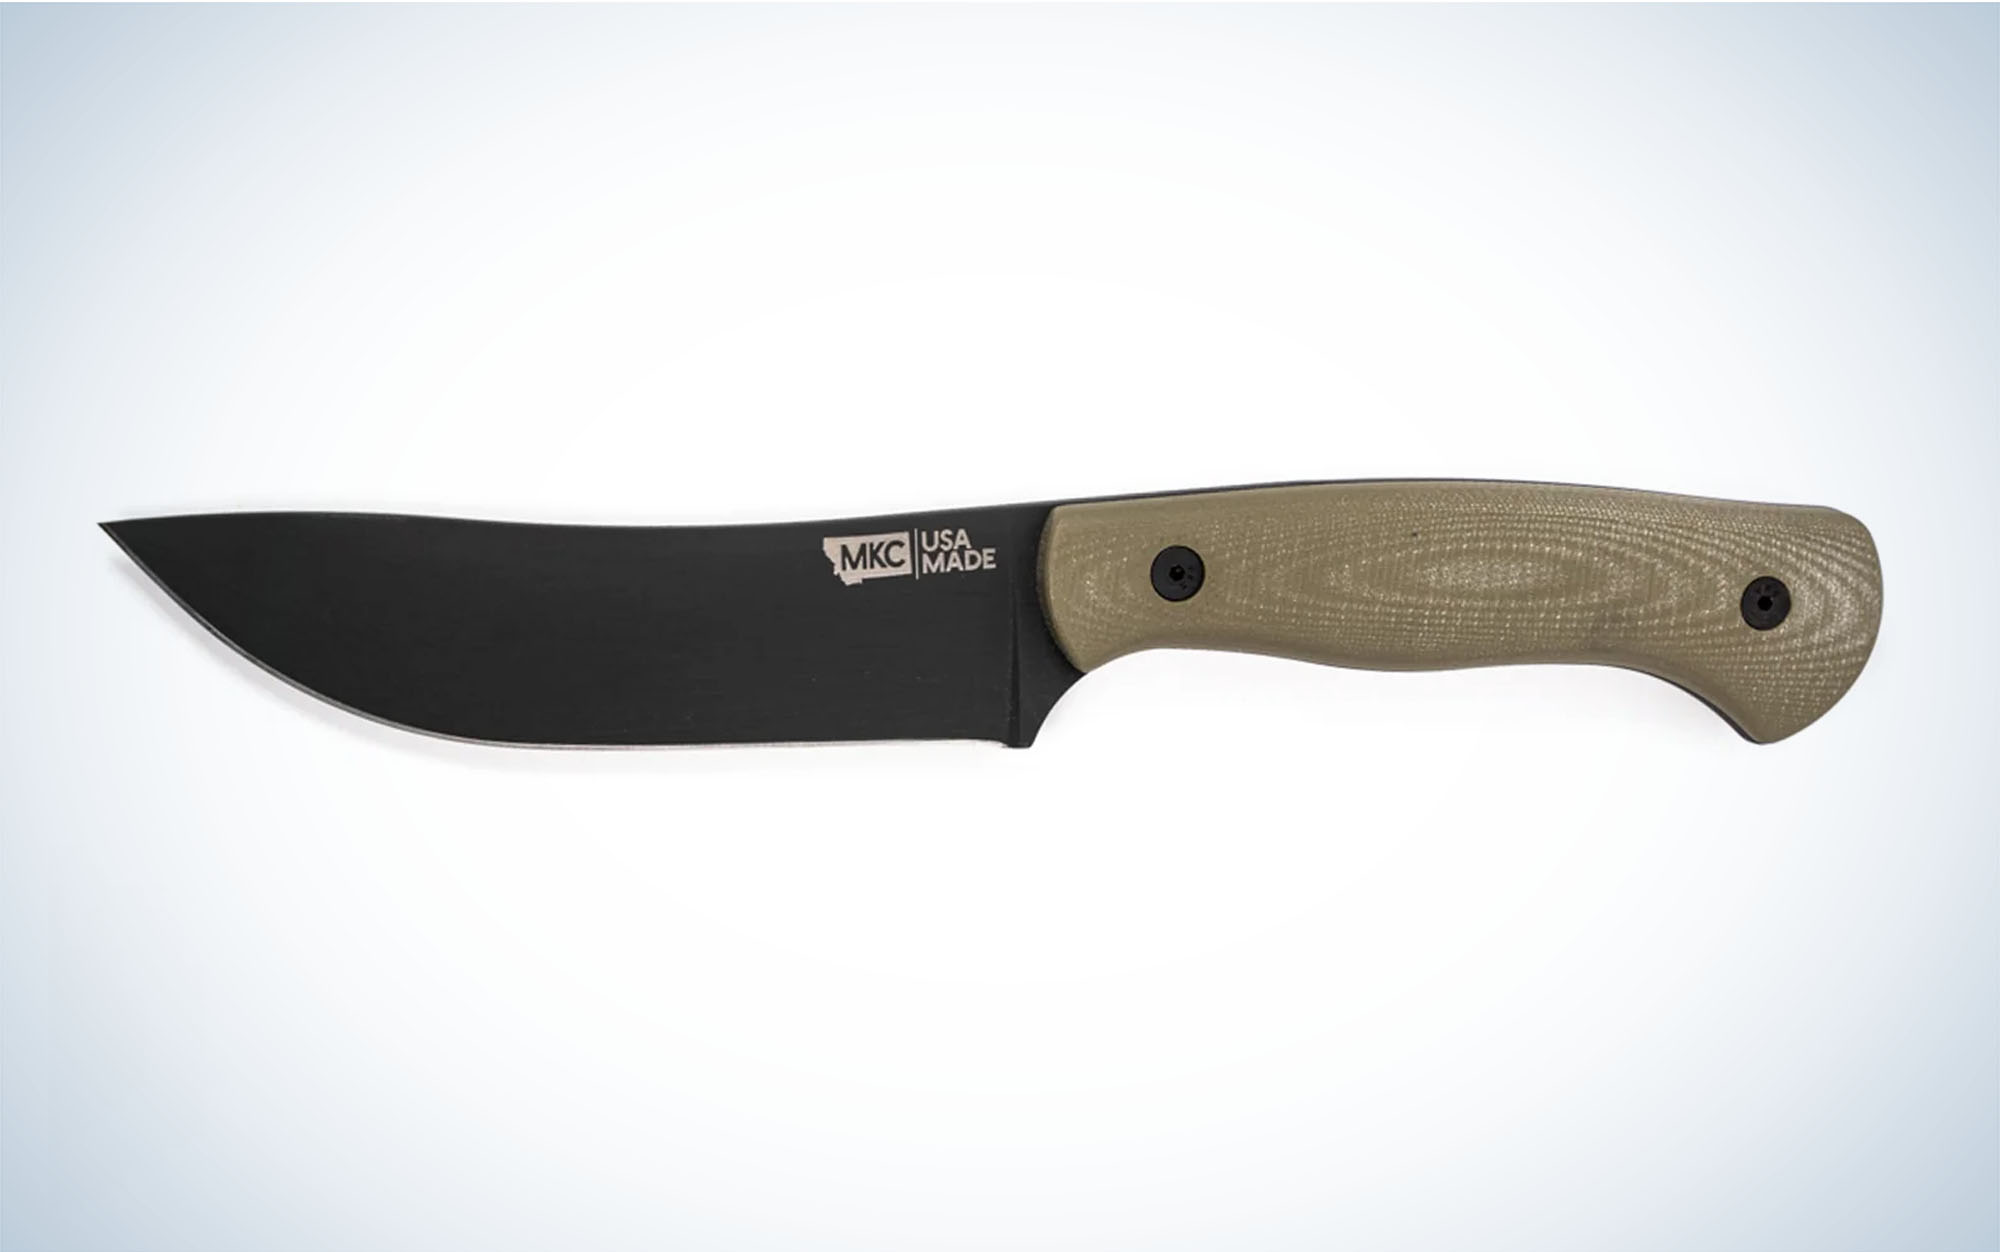 We tested the Montana Knife Company Stonewall Skinner.